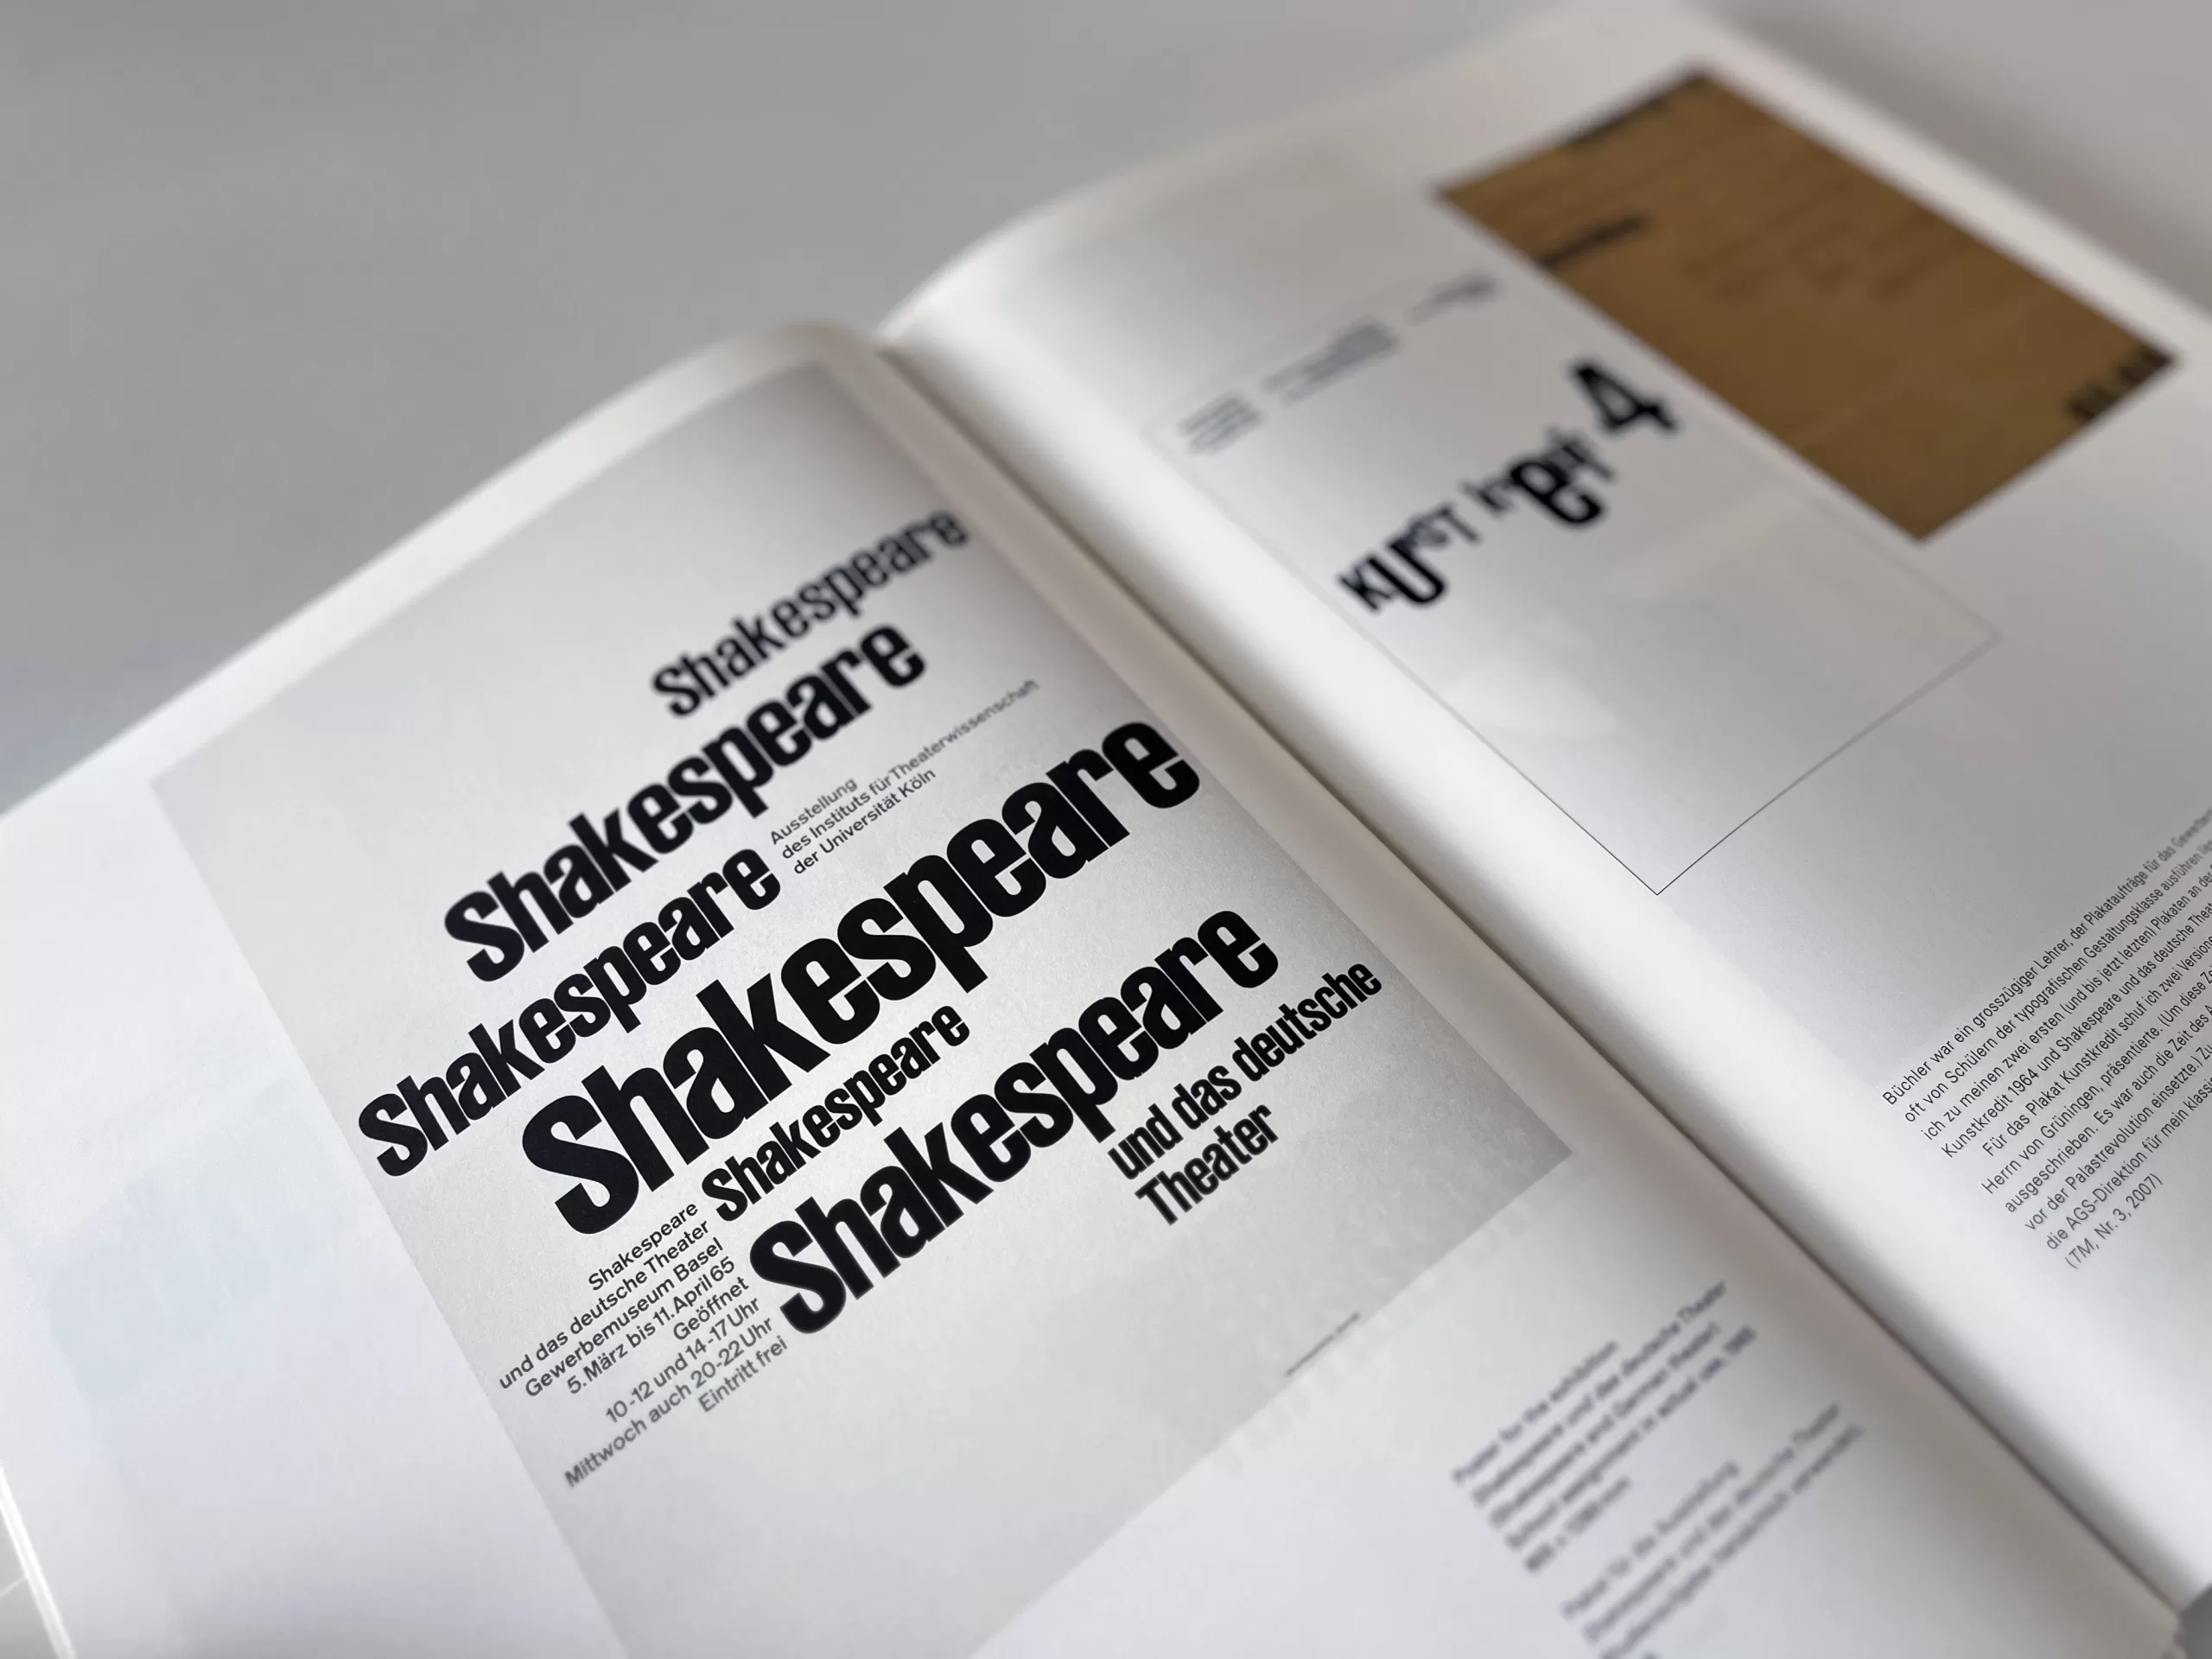 Helmut Schmid Typography, Lars Müller Publishers, 2023